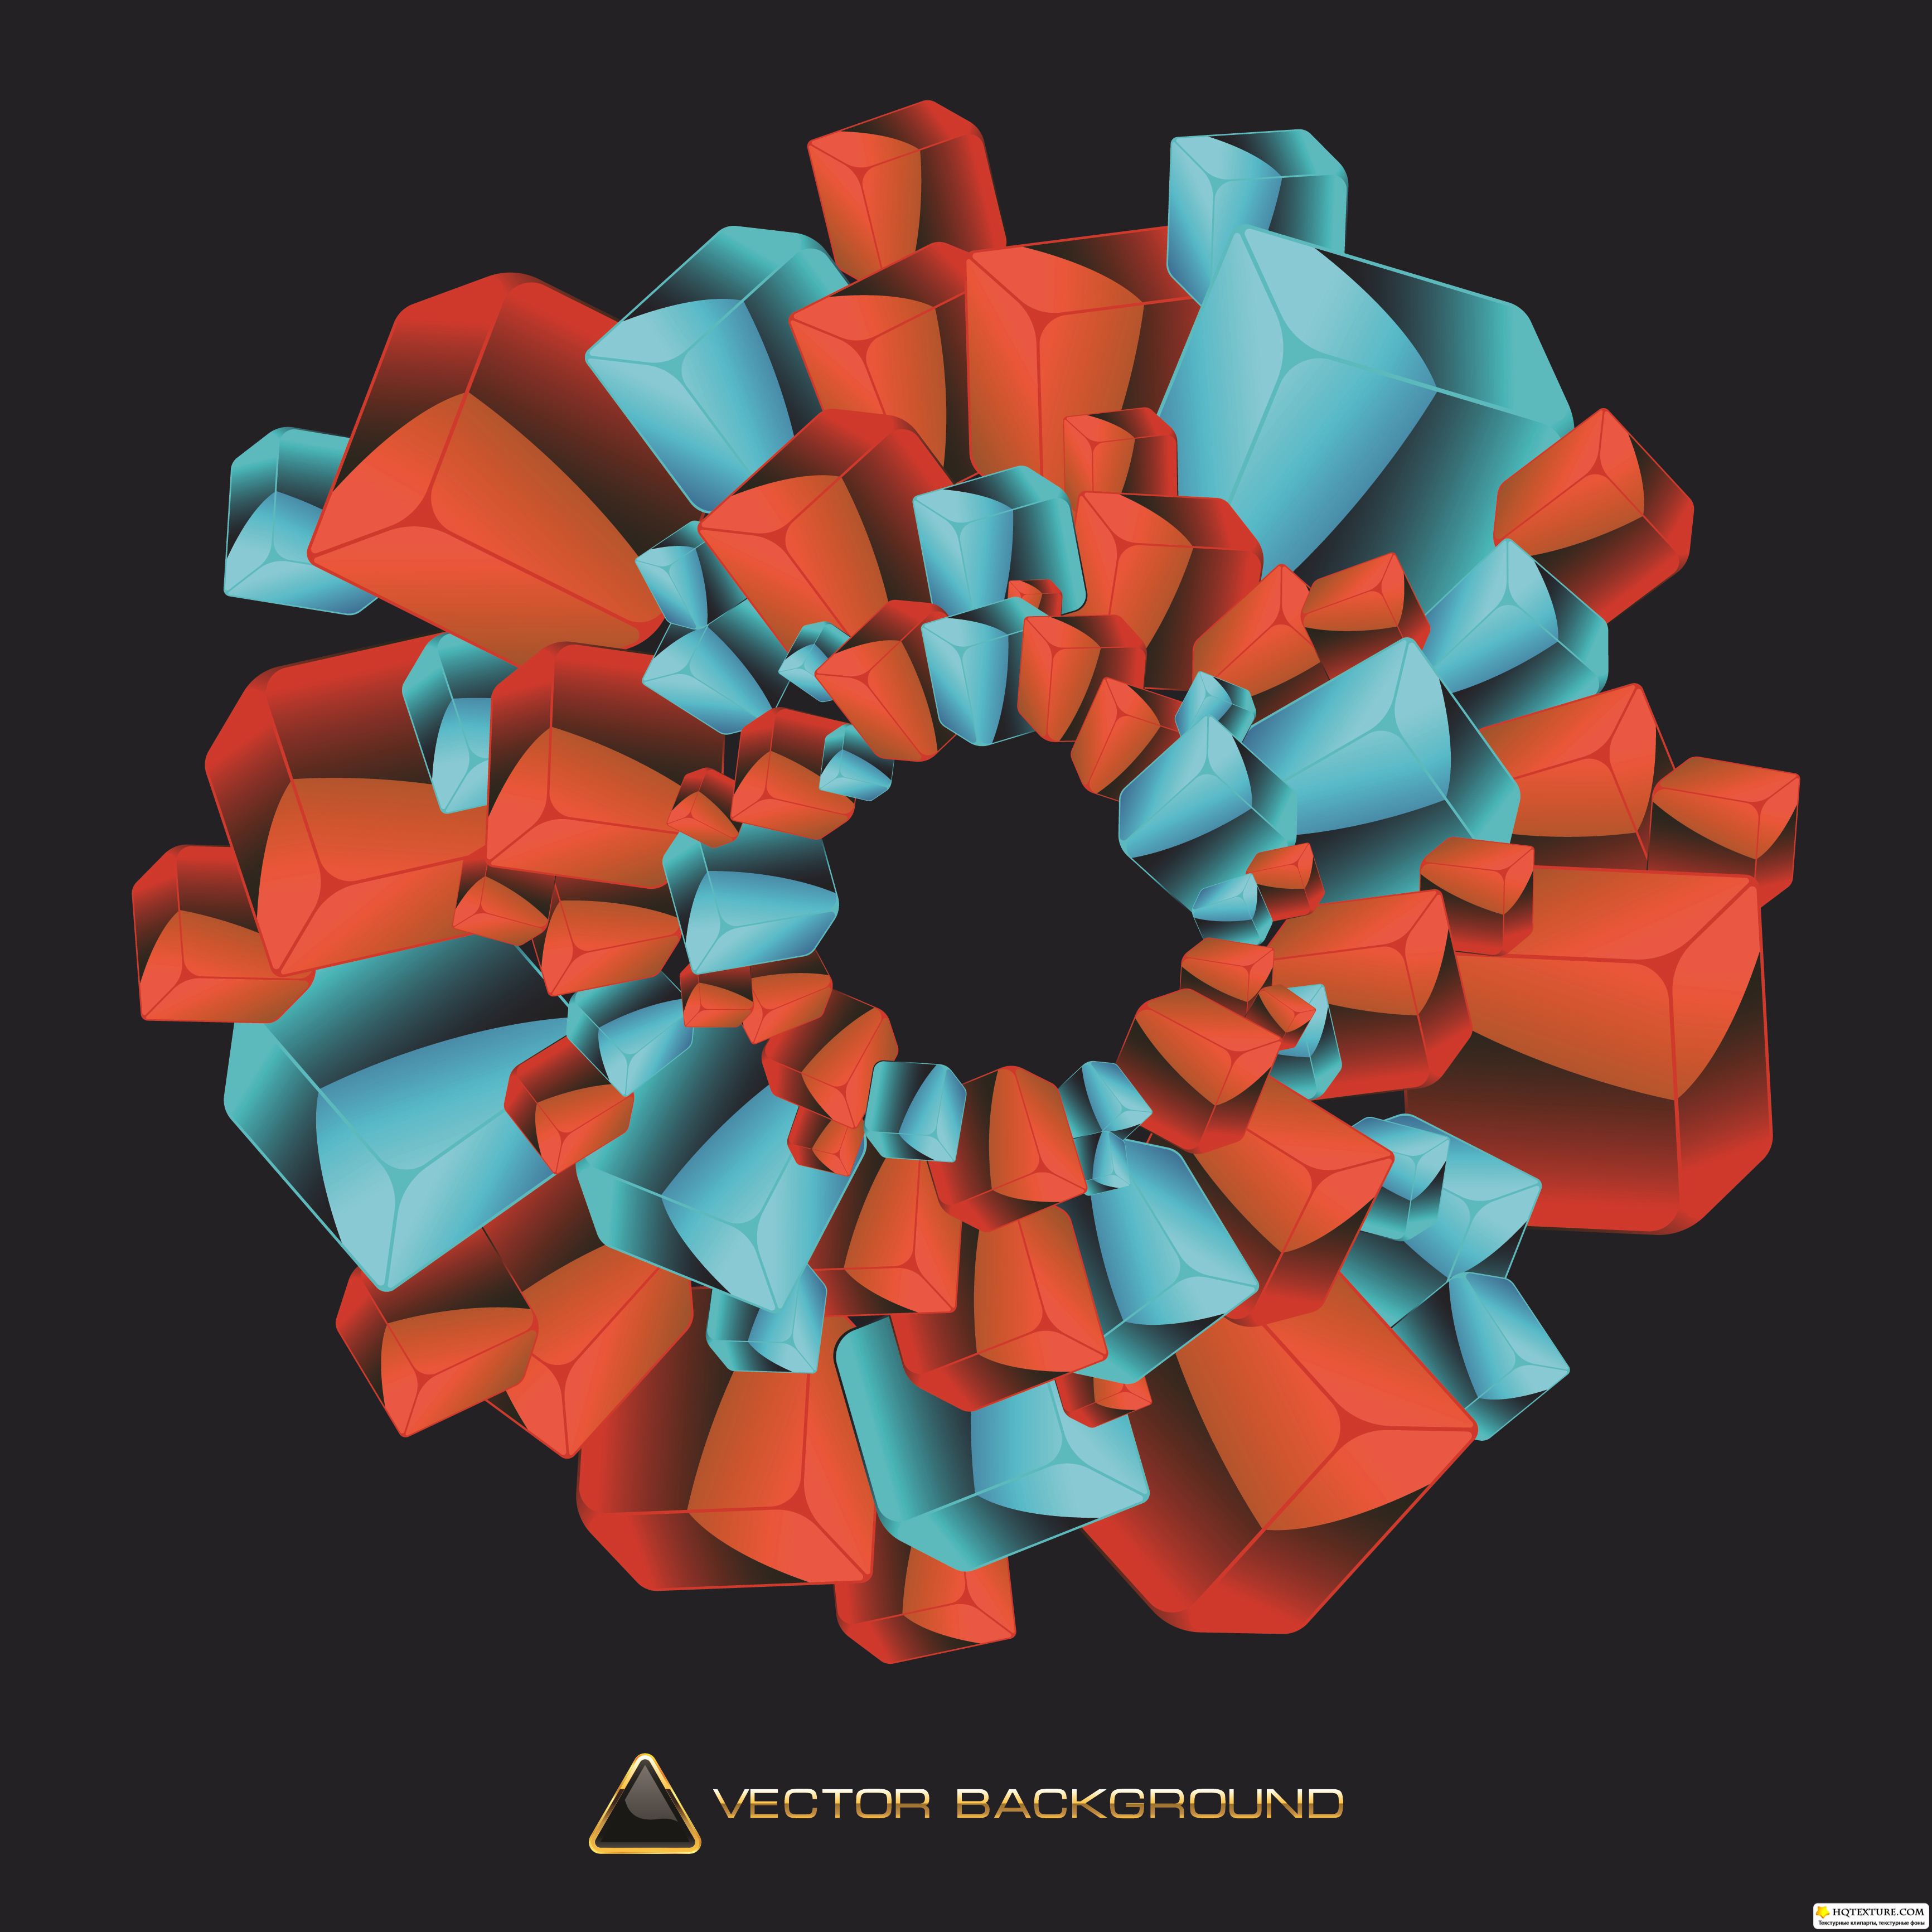 Download Vector Backgrounds 3D objects » Векторные клипарты, текстурные фоны, бекграунды, AI, EPS, SVG